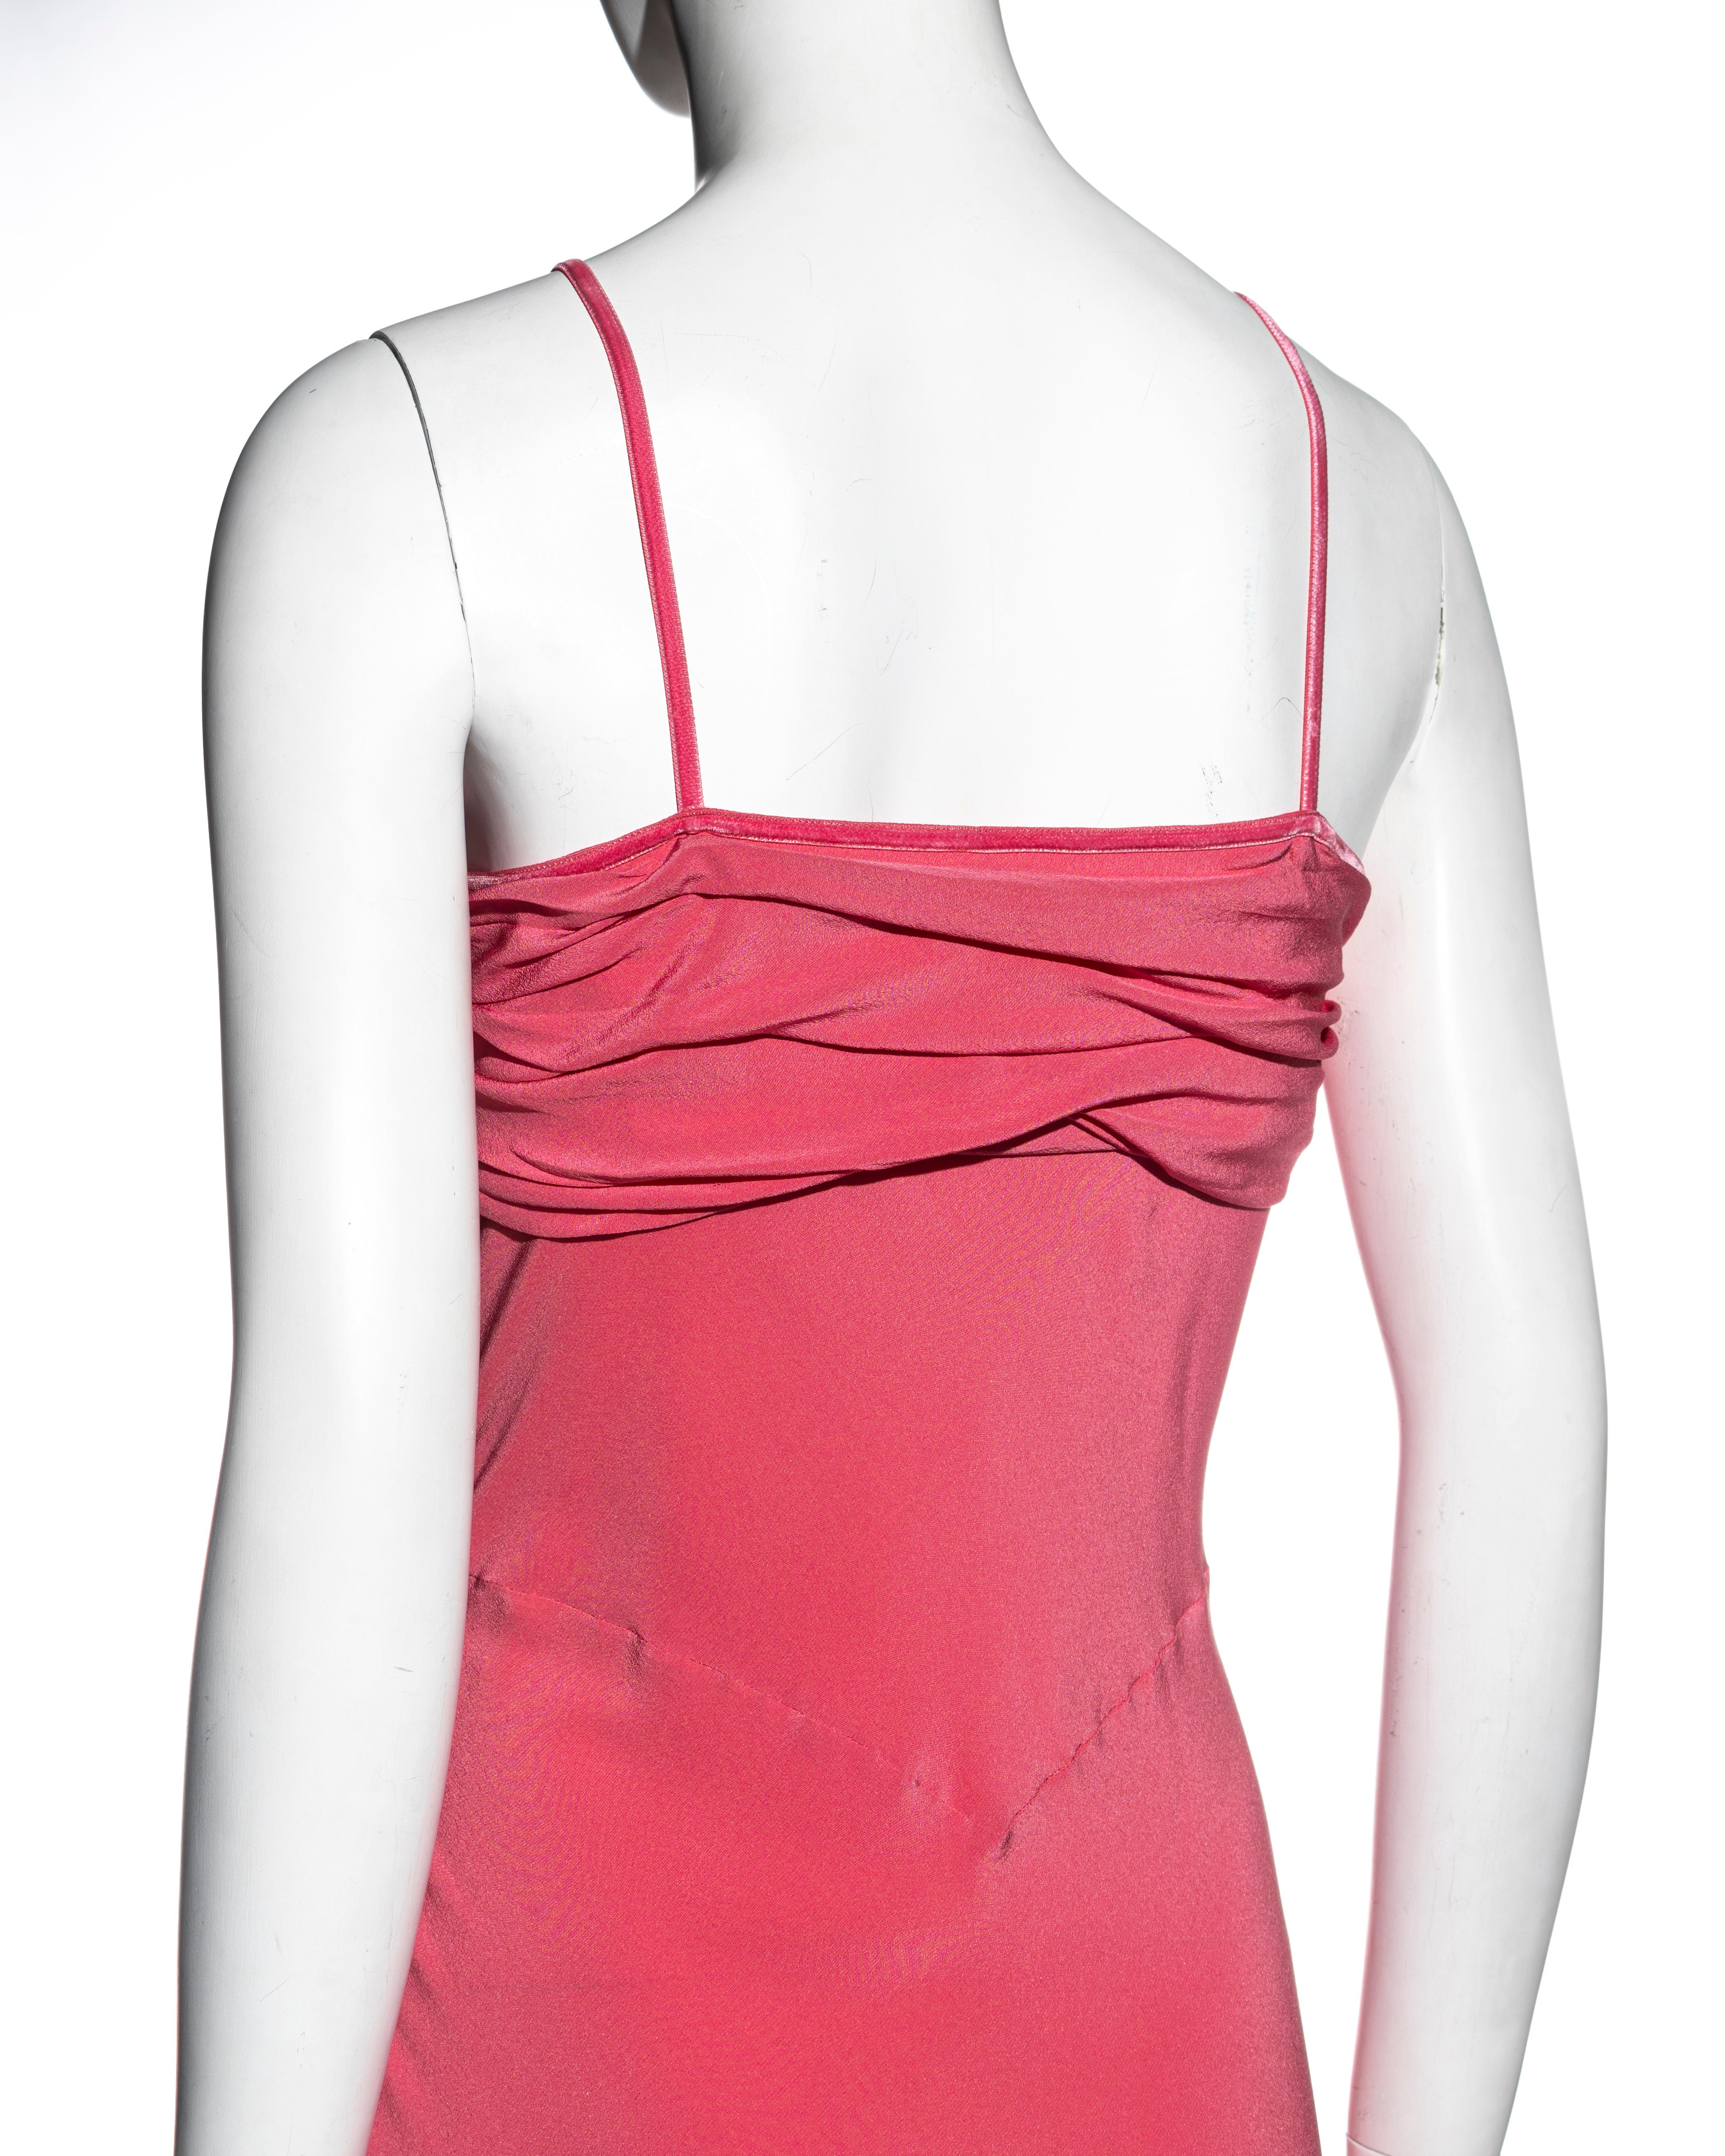 Women's Christian Dior by John Galliano pink silk maxi dress, ss 2006